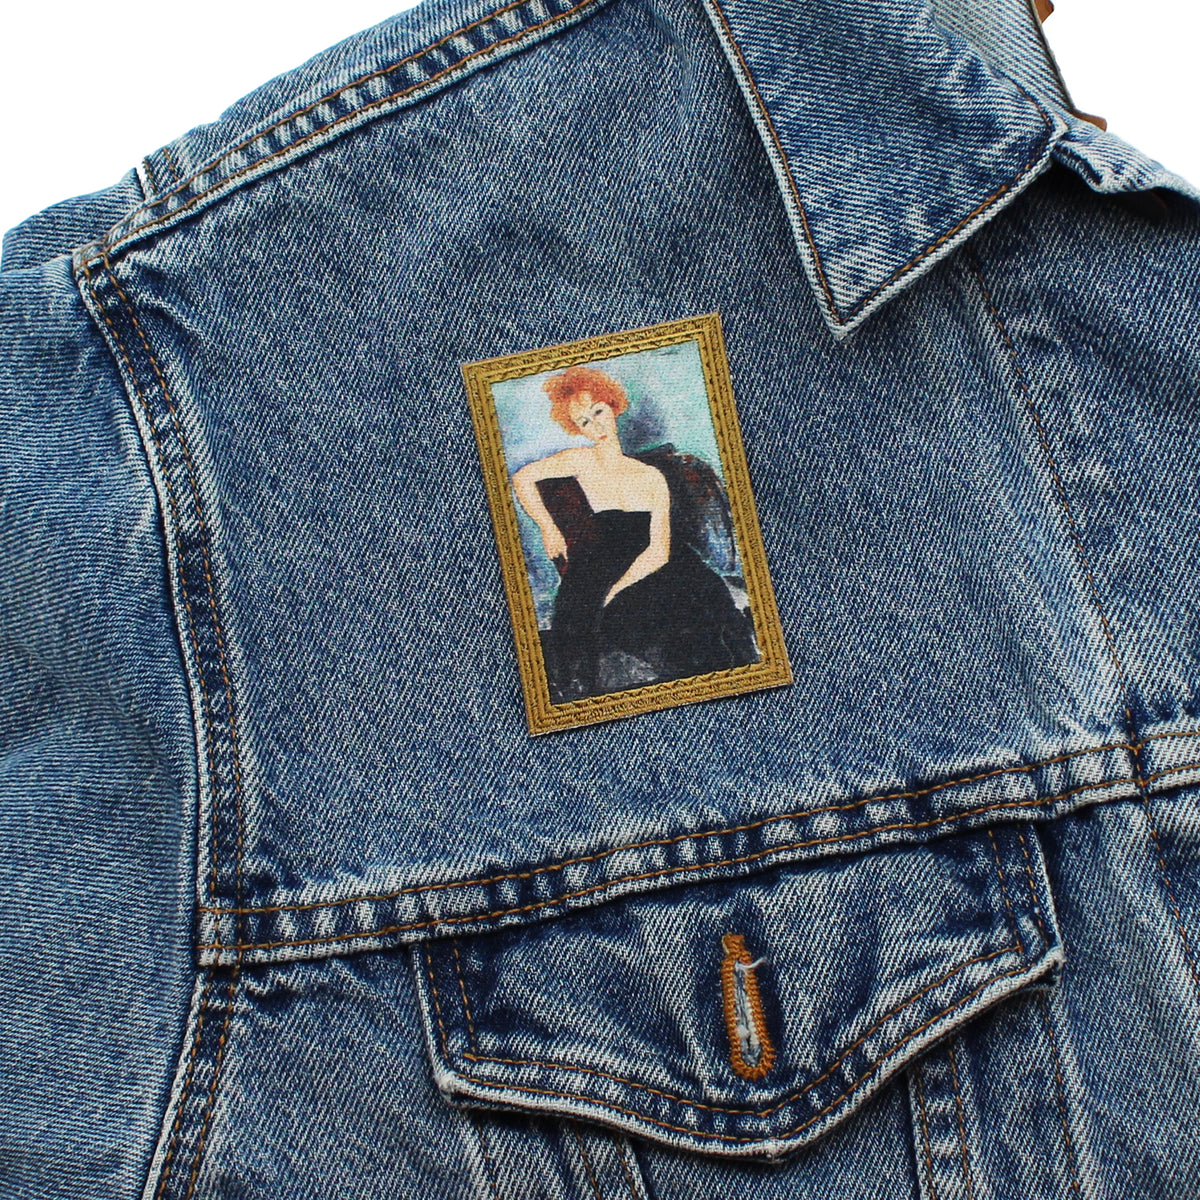 Modigliani &quot;Redheaded Girl&quot; artwork patch